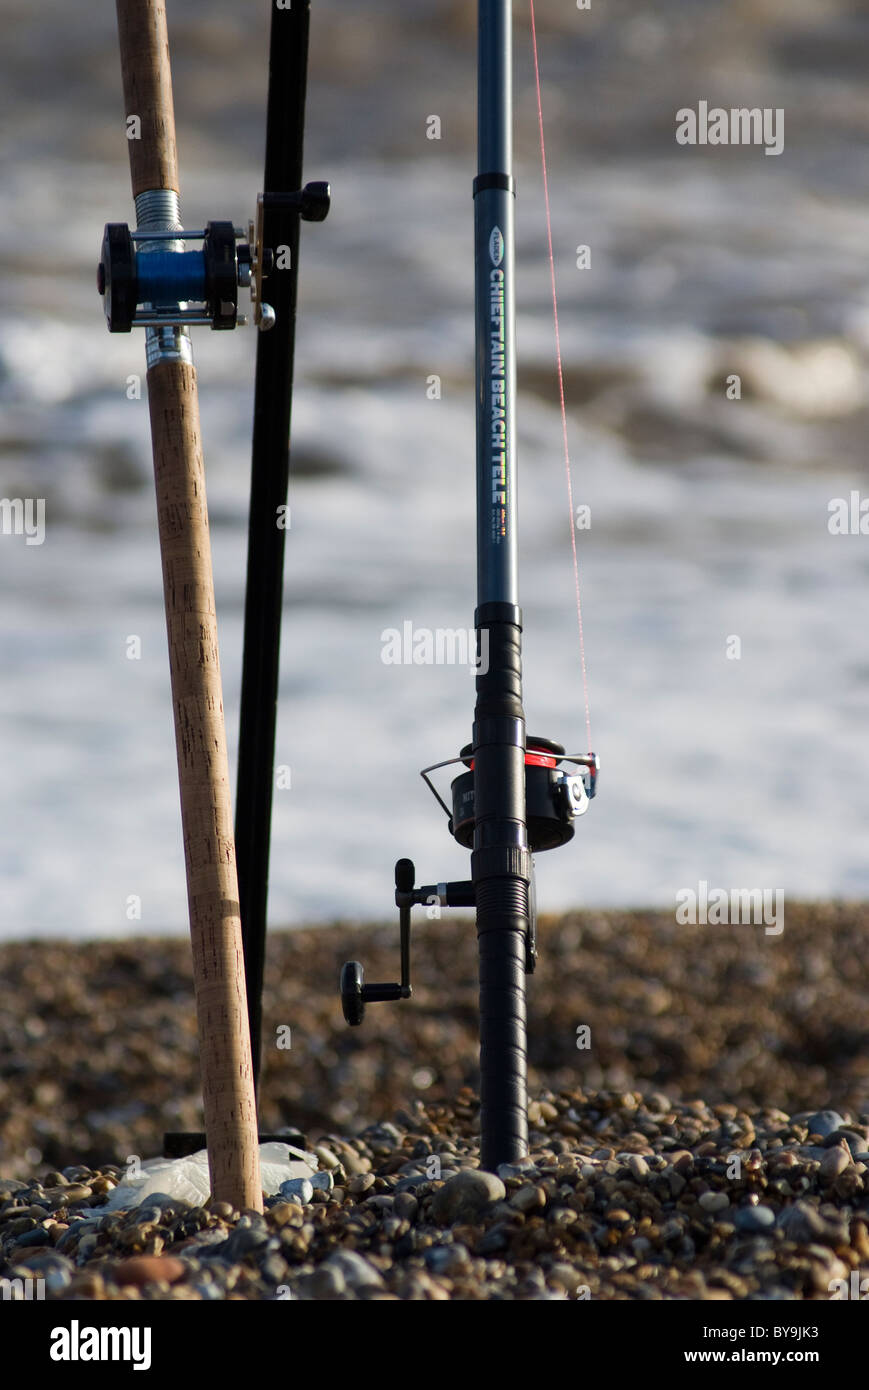 https://c8.alamy.com/comp/BY9JK3/sea-fishing-rods-on-beach-BY9JK3.jpg